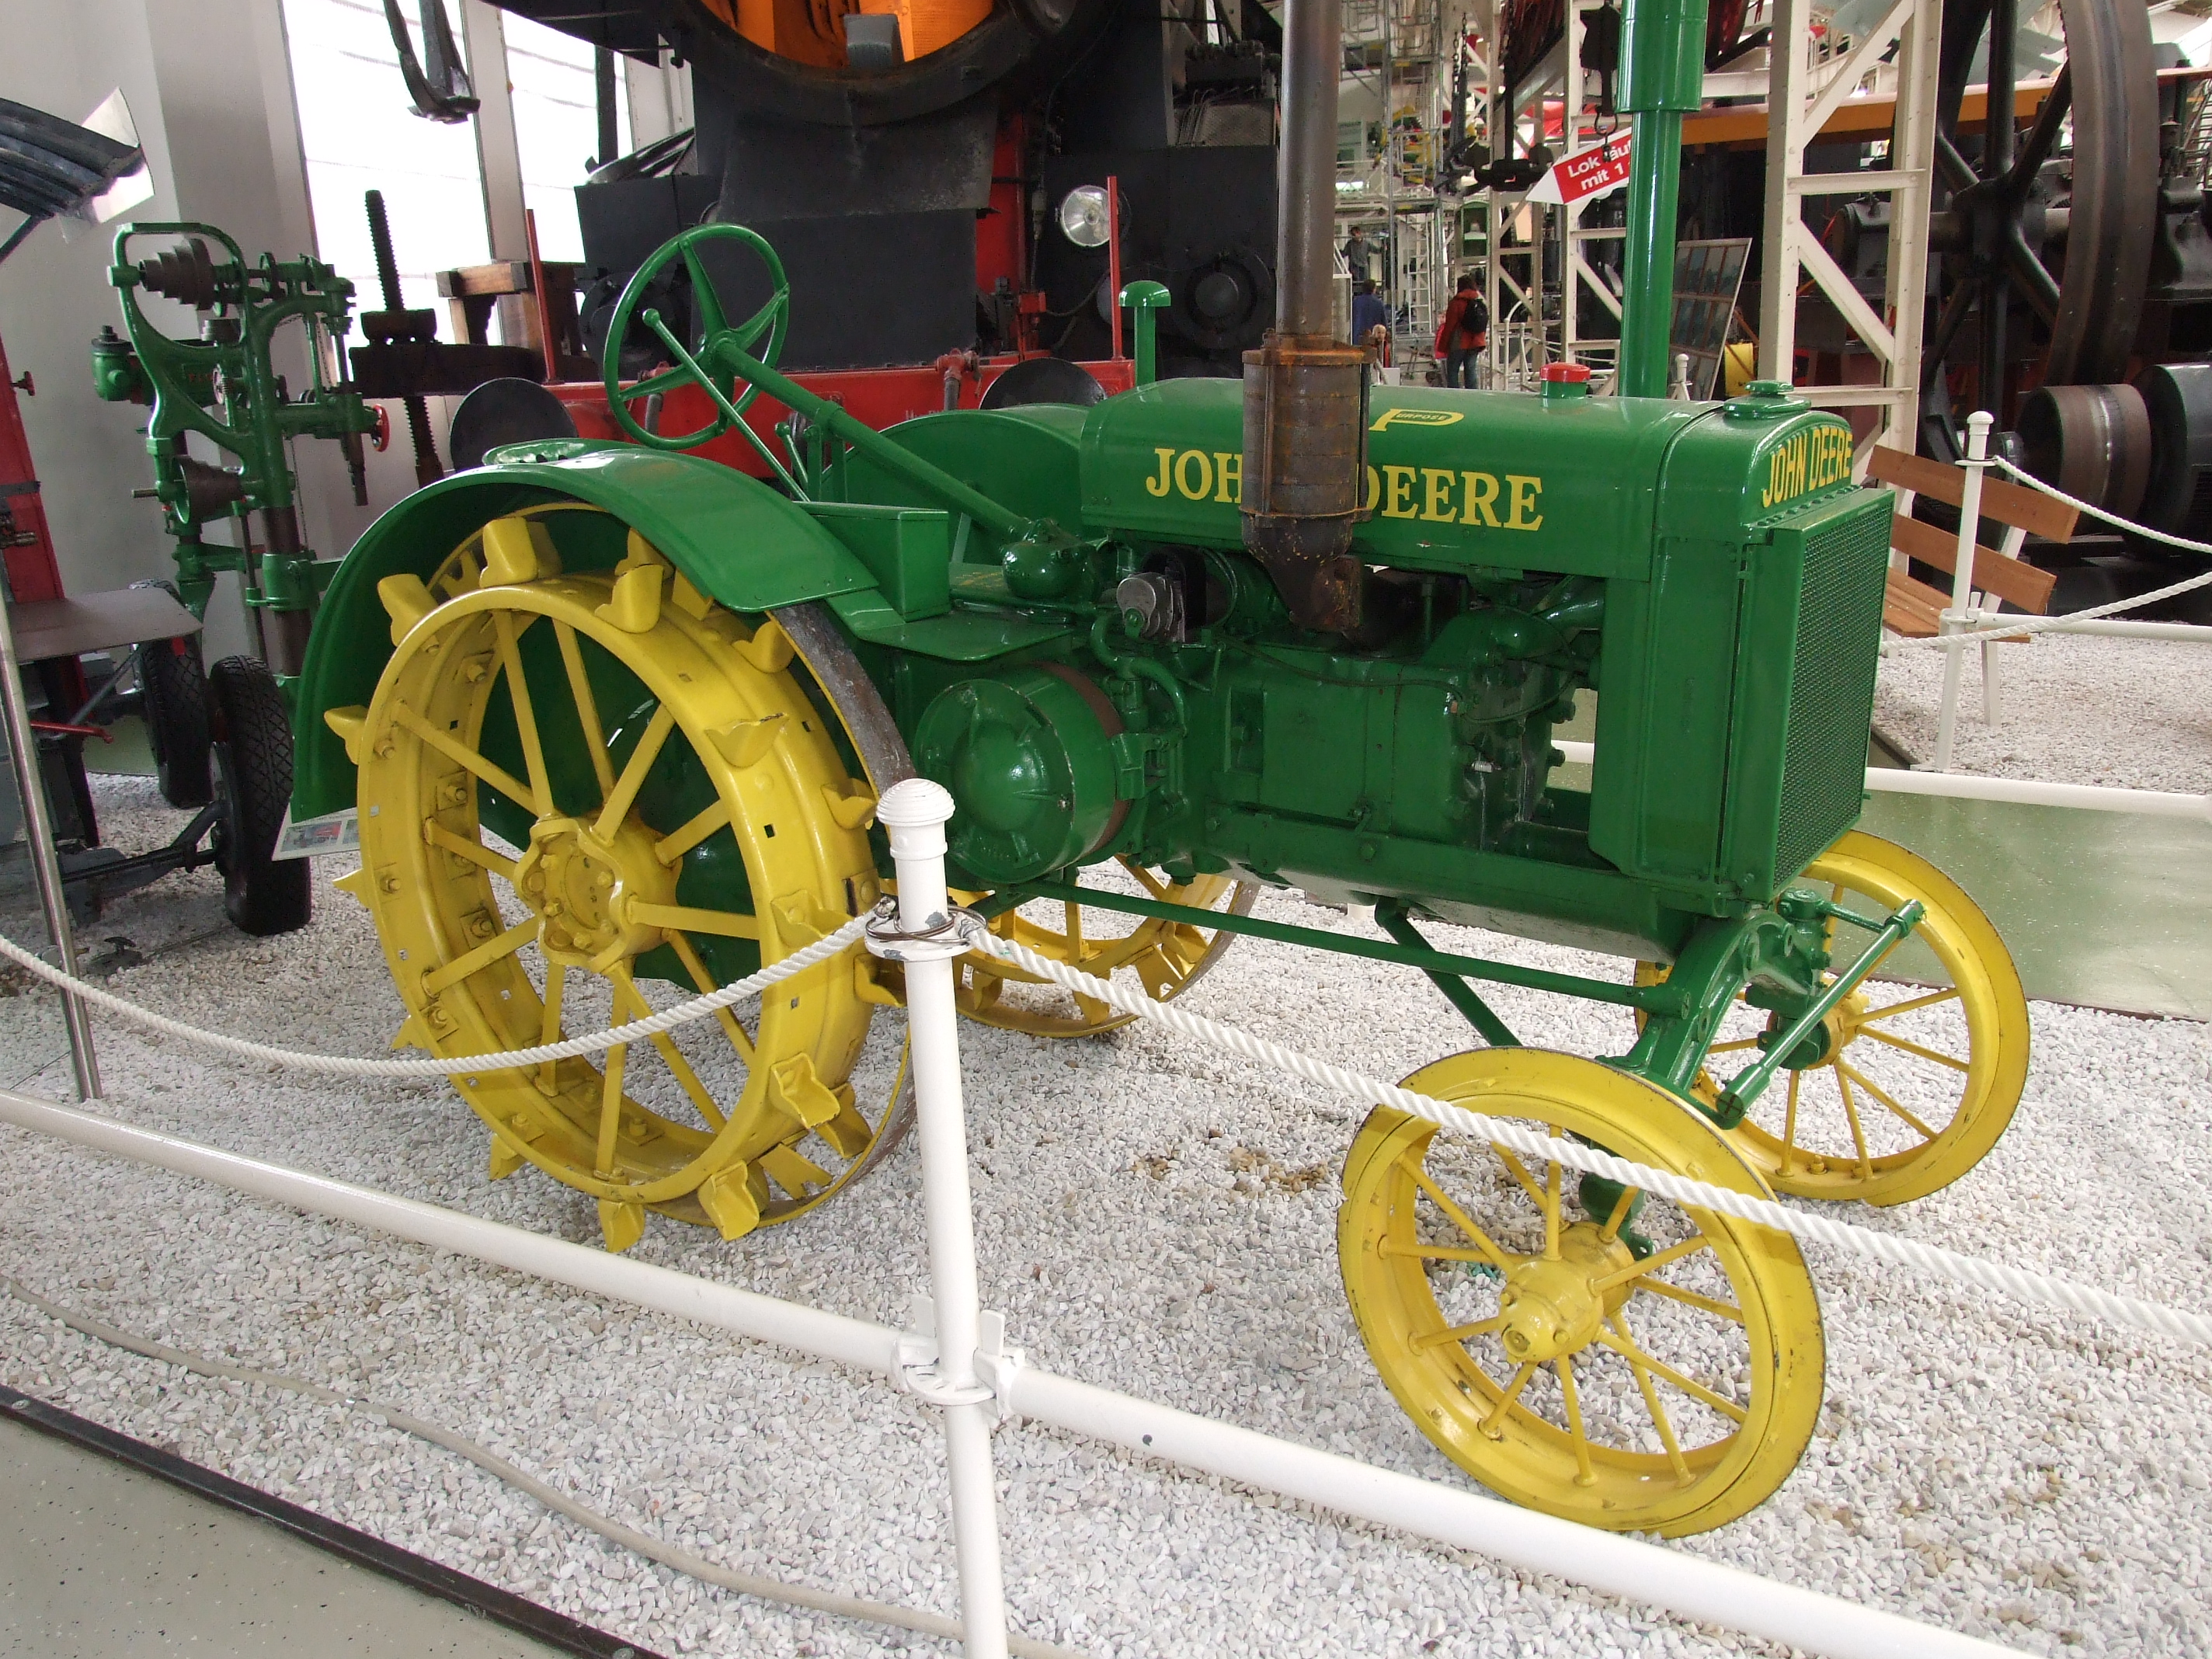 File:Old John Deere tractor.JPG - Wikimedia Commons